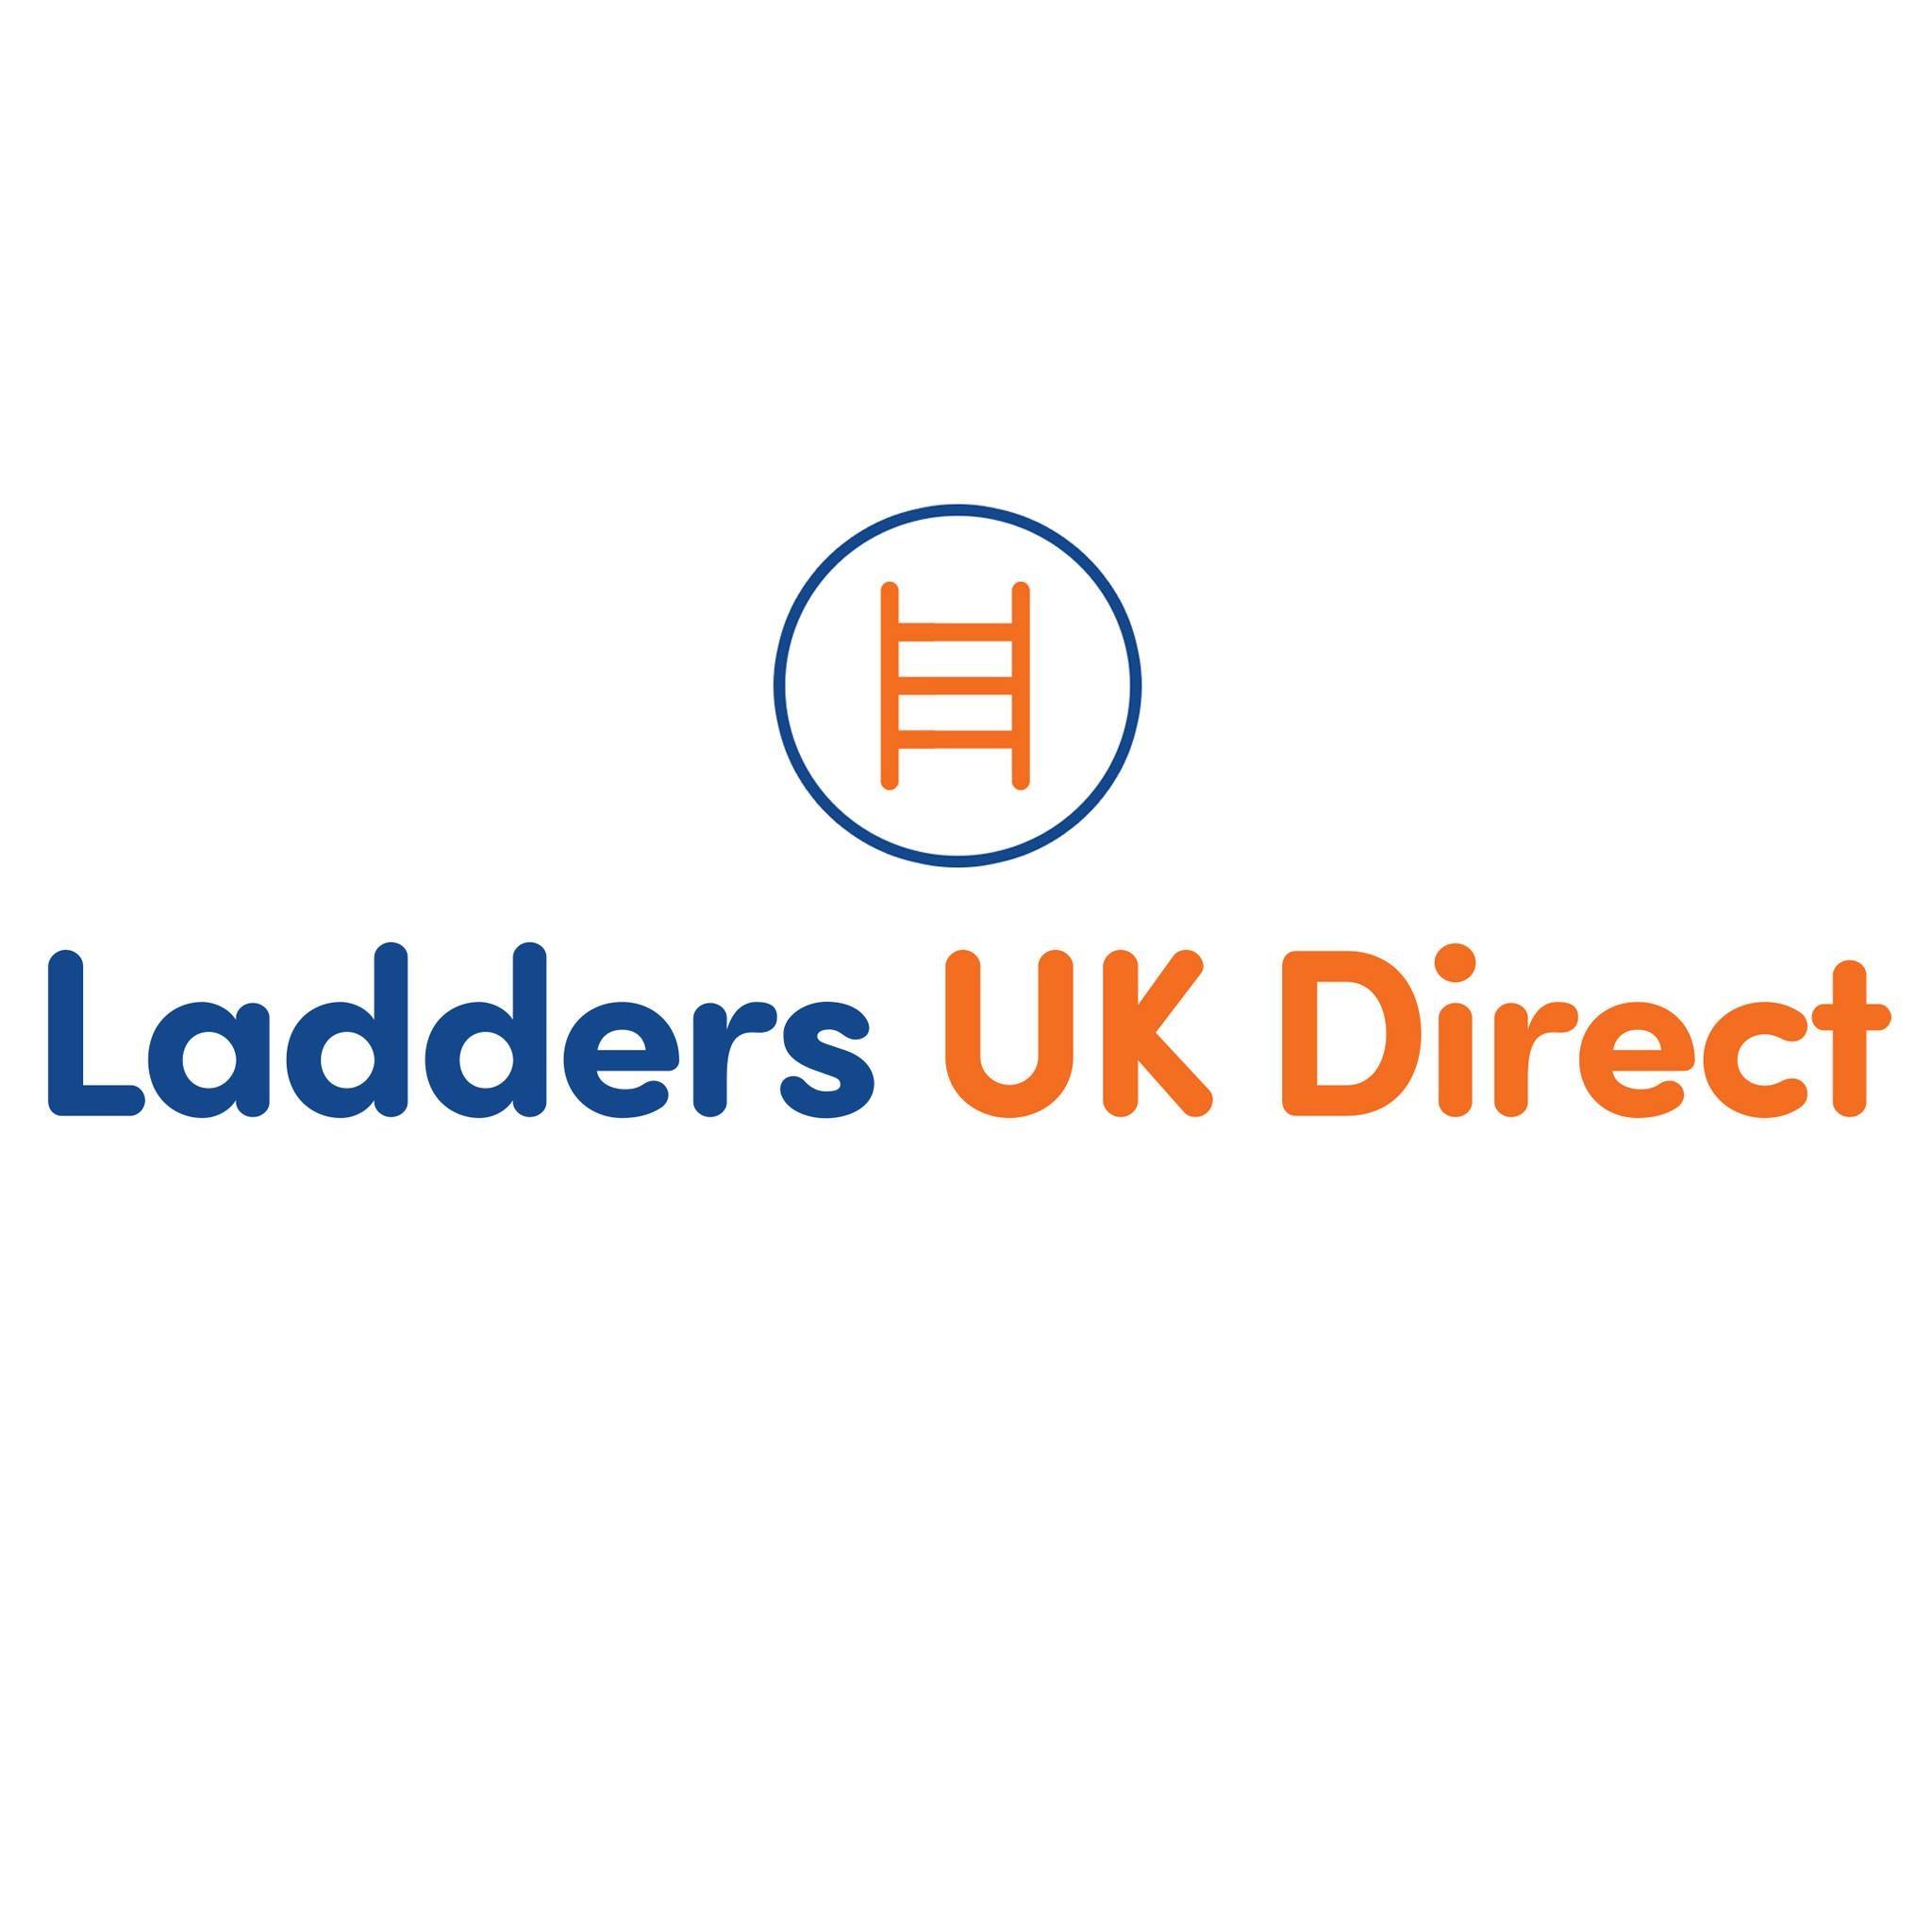 Ladders UK Direct logo